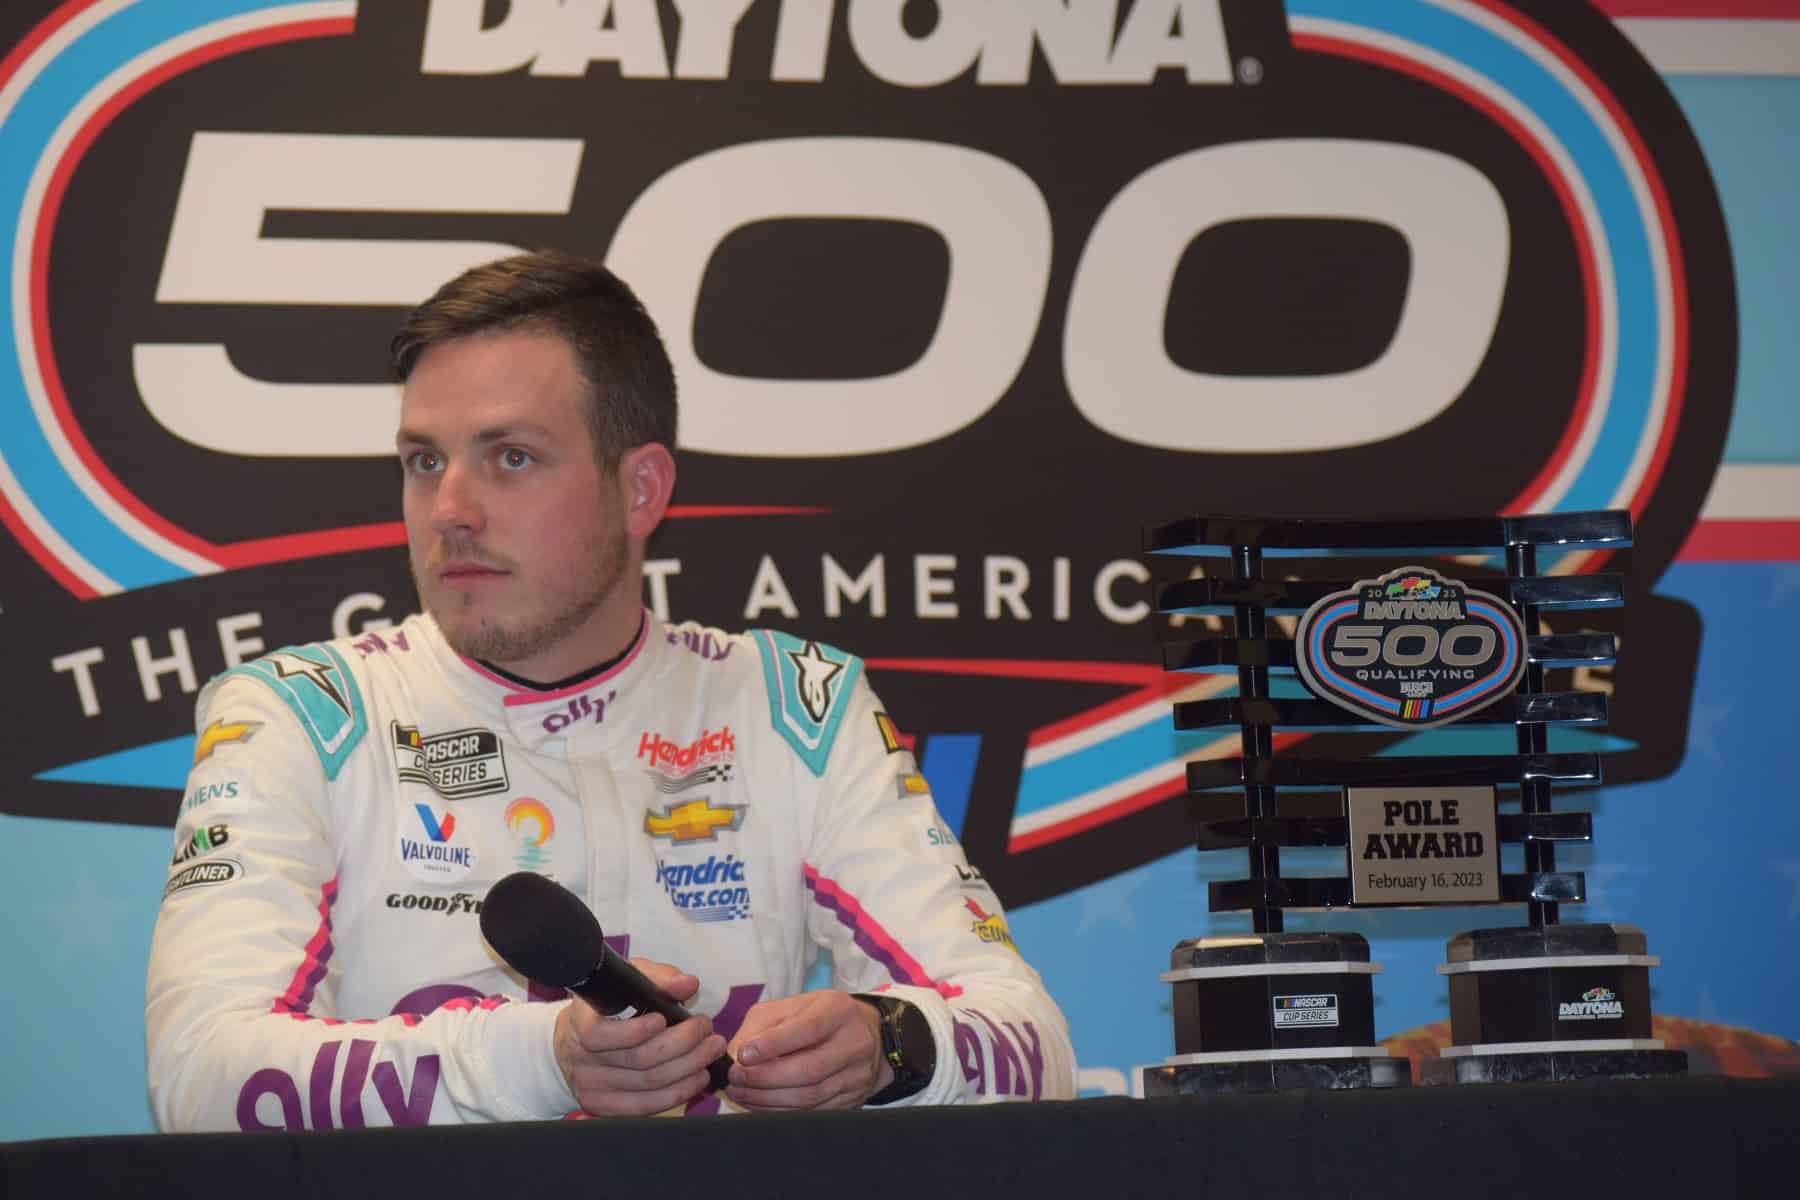 Alex Bowman earned his third Daytona 500 pole award on Wednesday night.